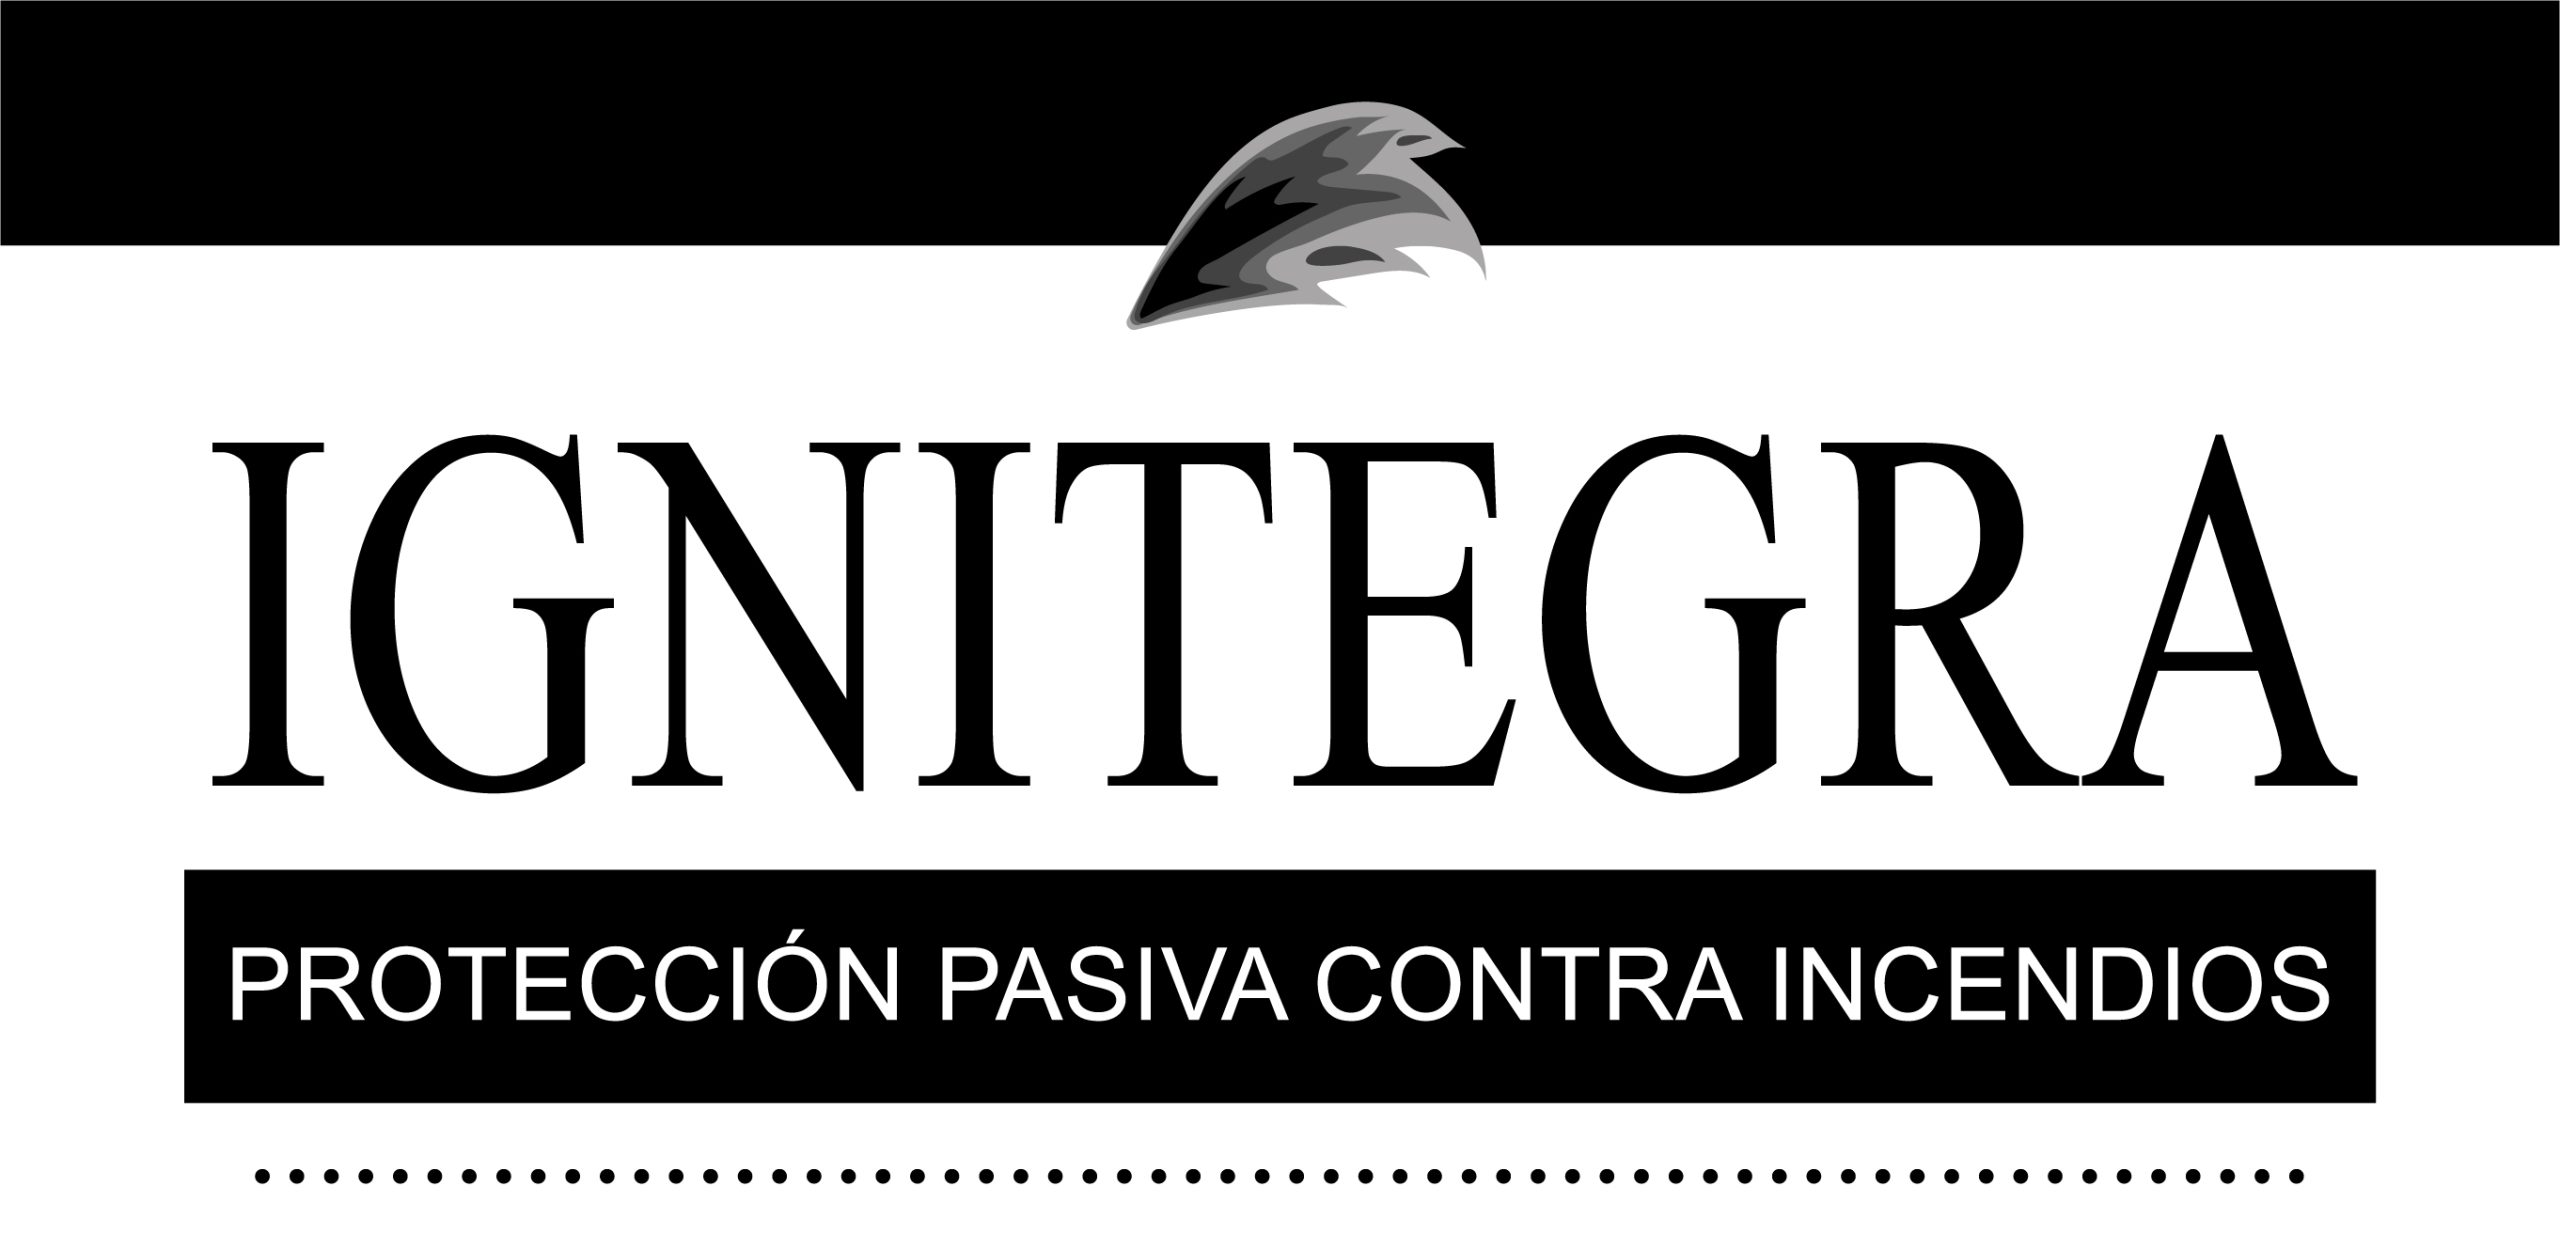 Logotipo Ignitegra